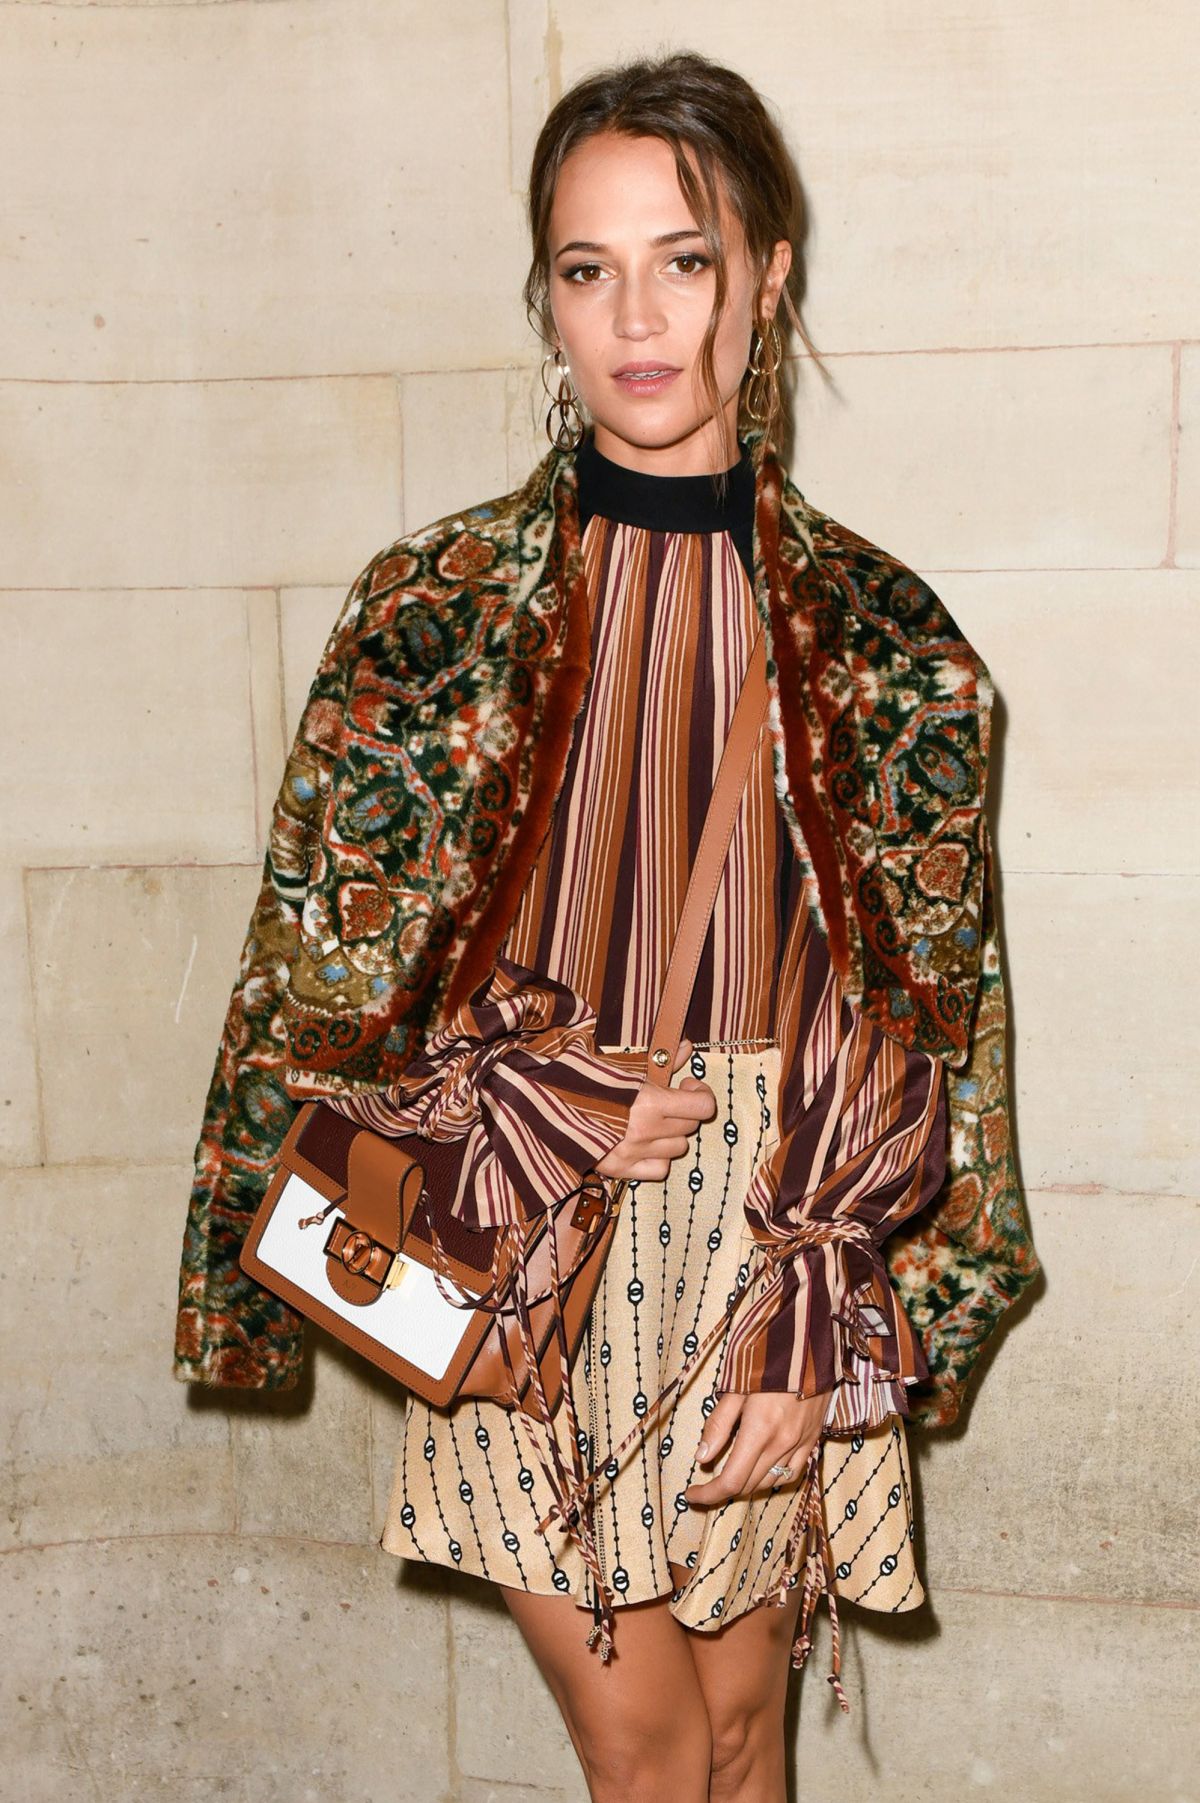 ALICIA VIKANDER at Louis Vuitton Show at Paris Fashion Week 10/02/2018 – HawtCelebs